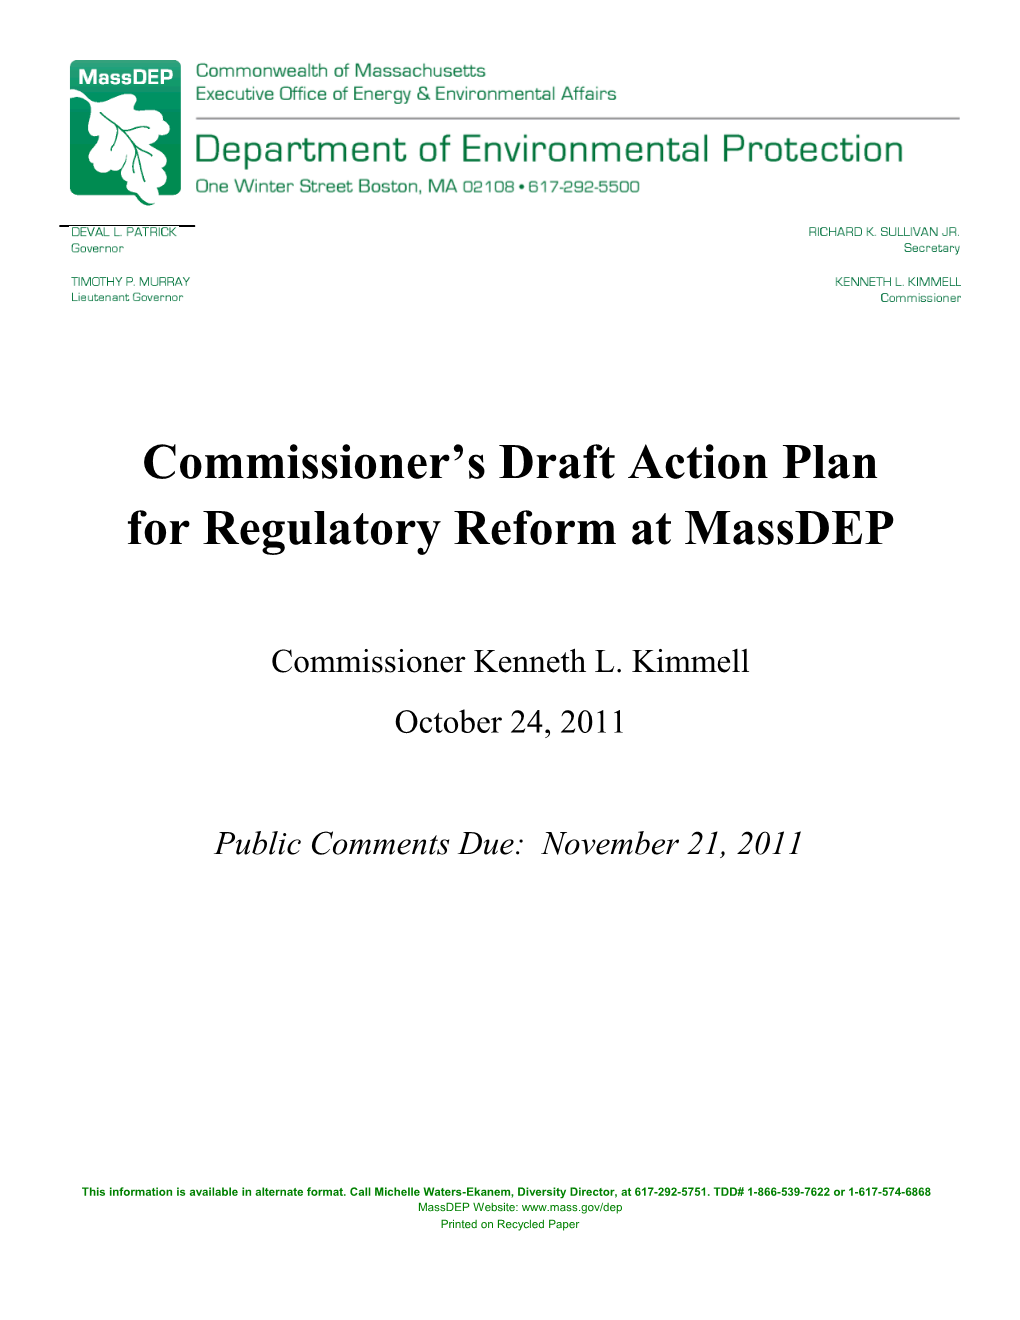 Commissioner S Draft Action Plan for Regulatory Reform at Massdep